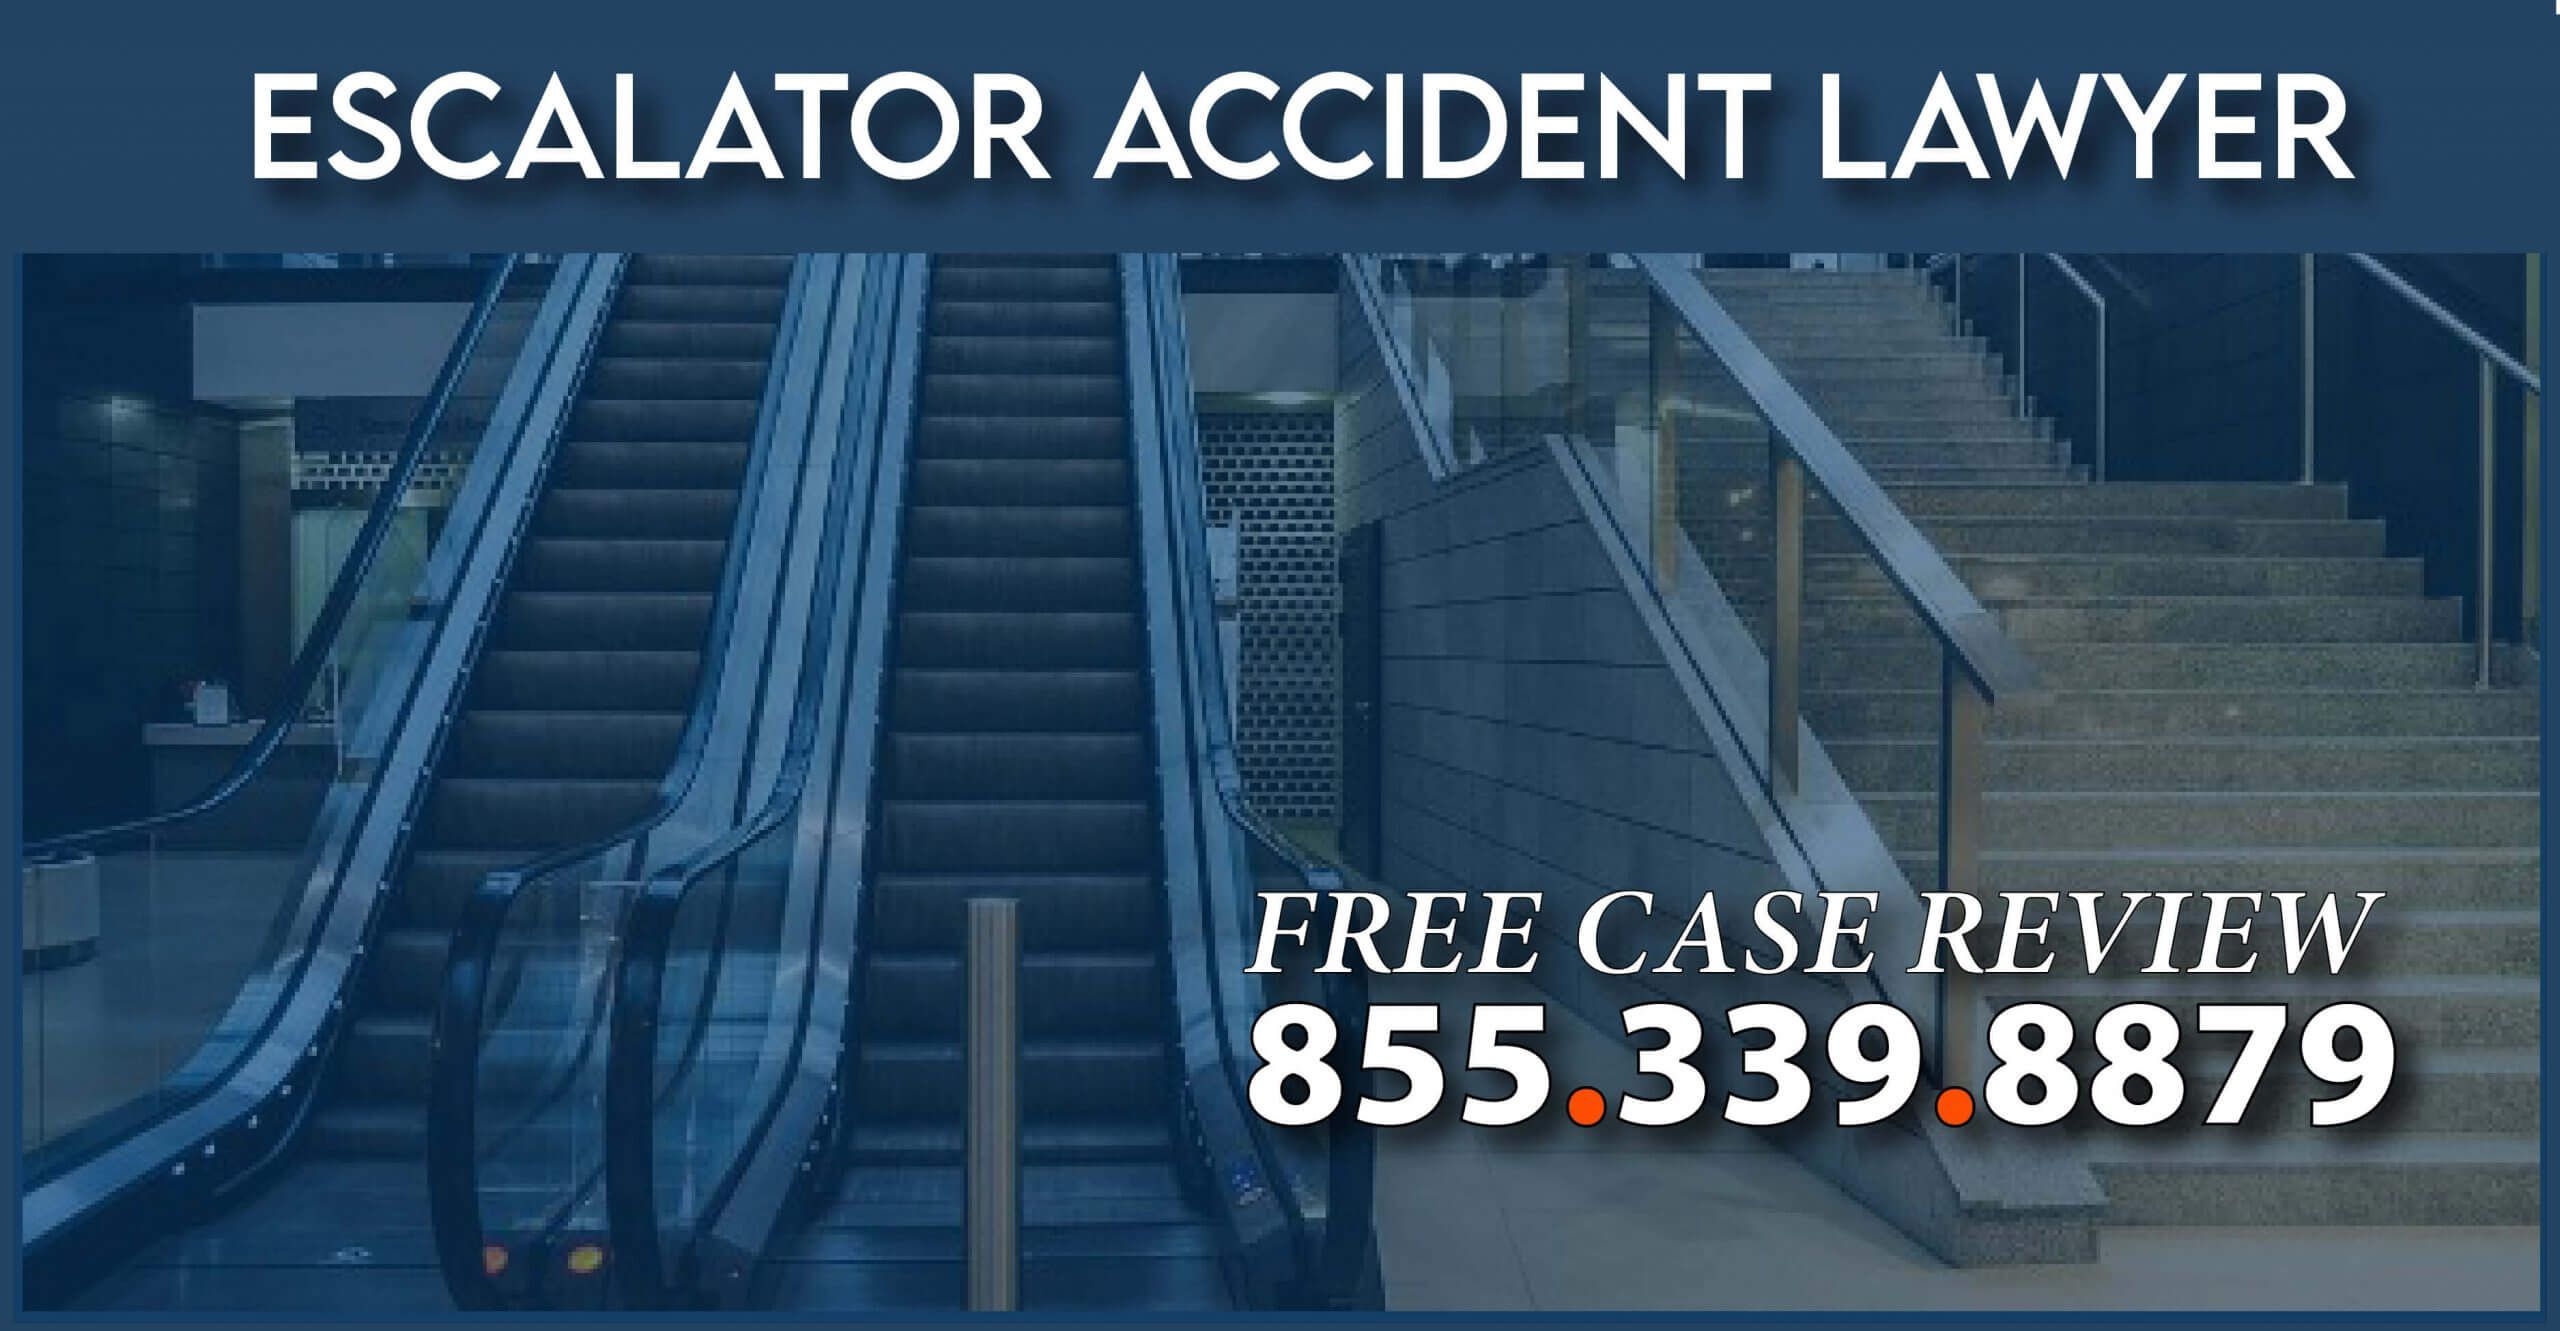 escalator accident lawyer injury incident bruise sprain medical expense sue premise liability